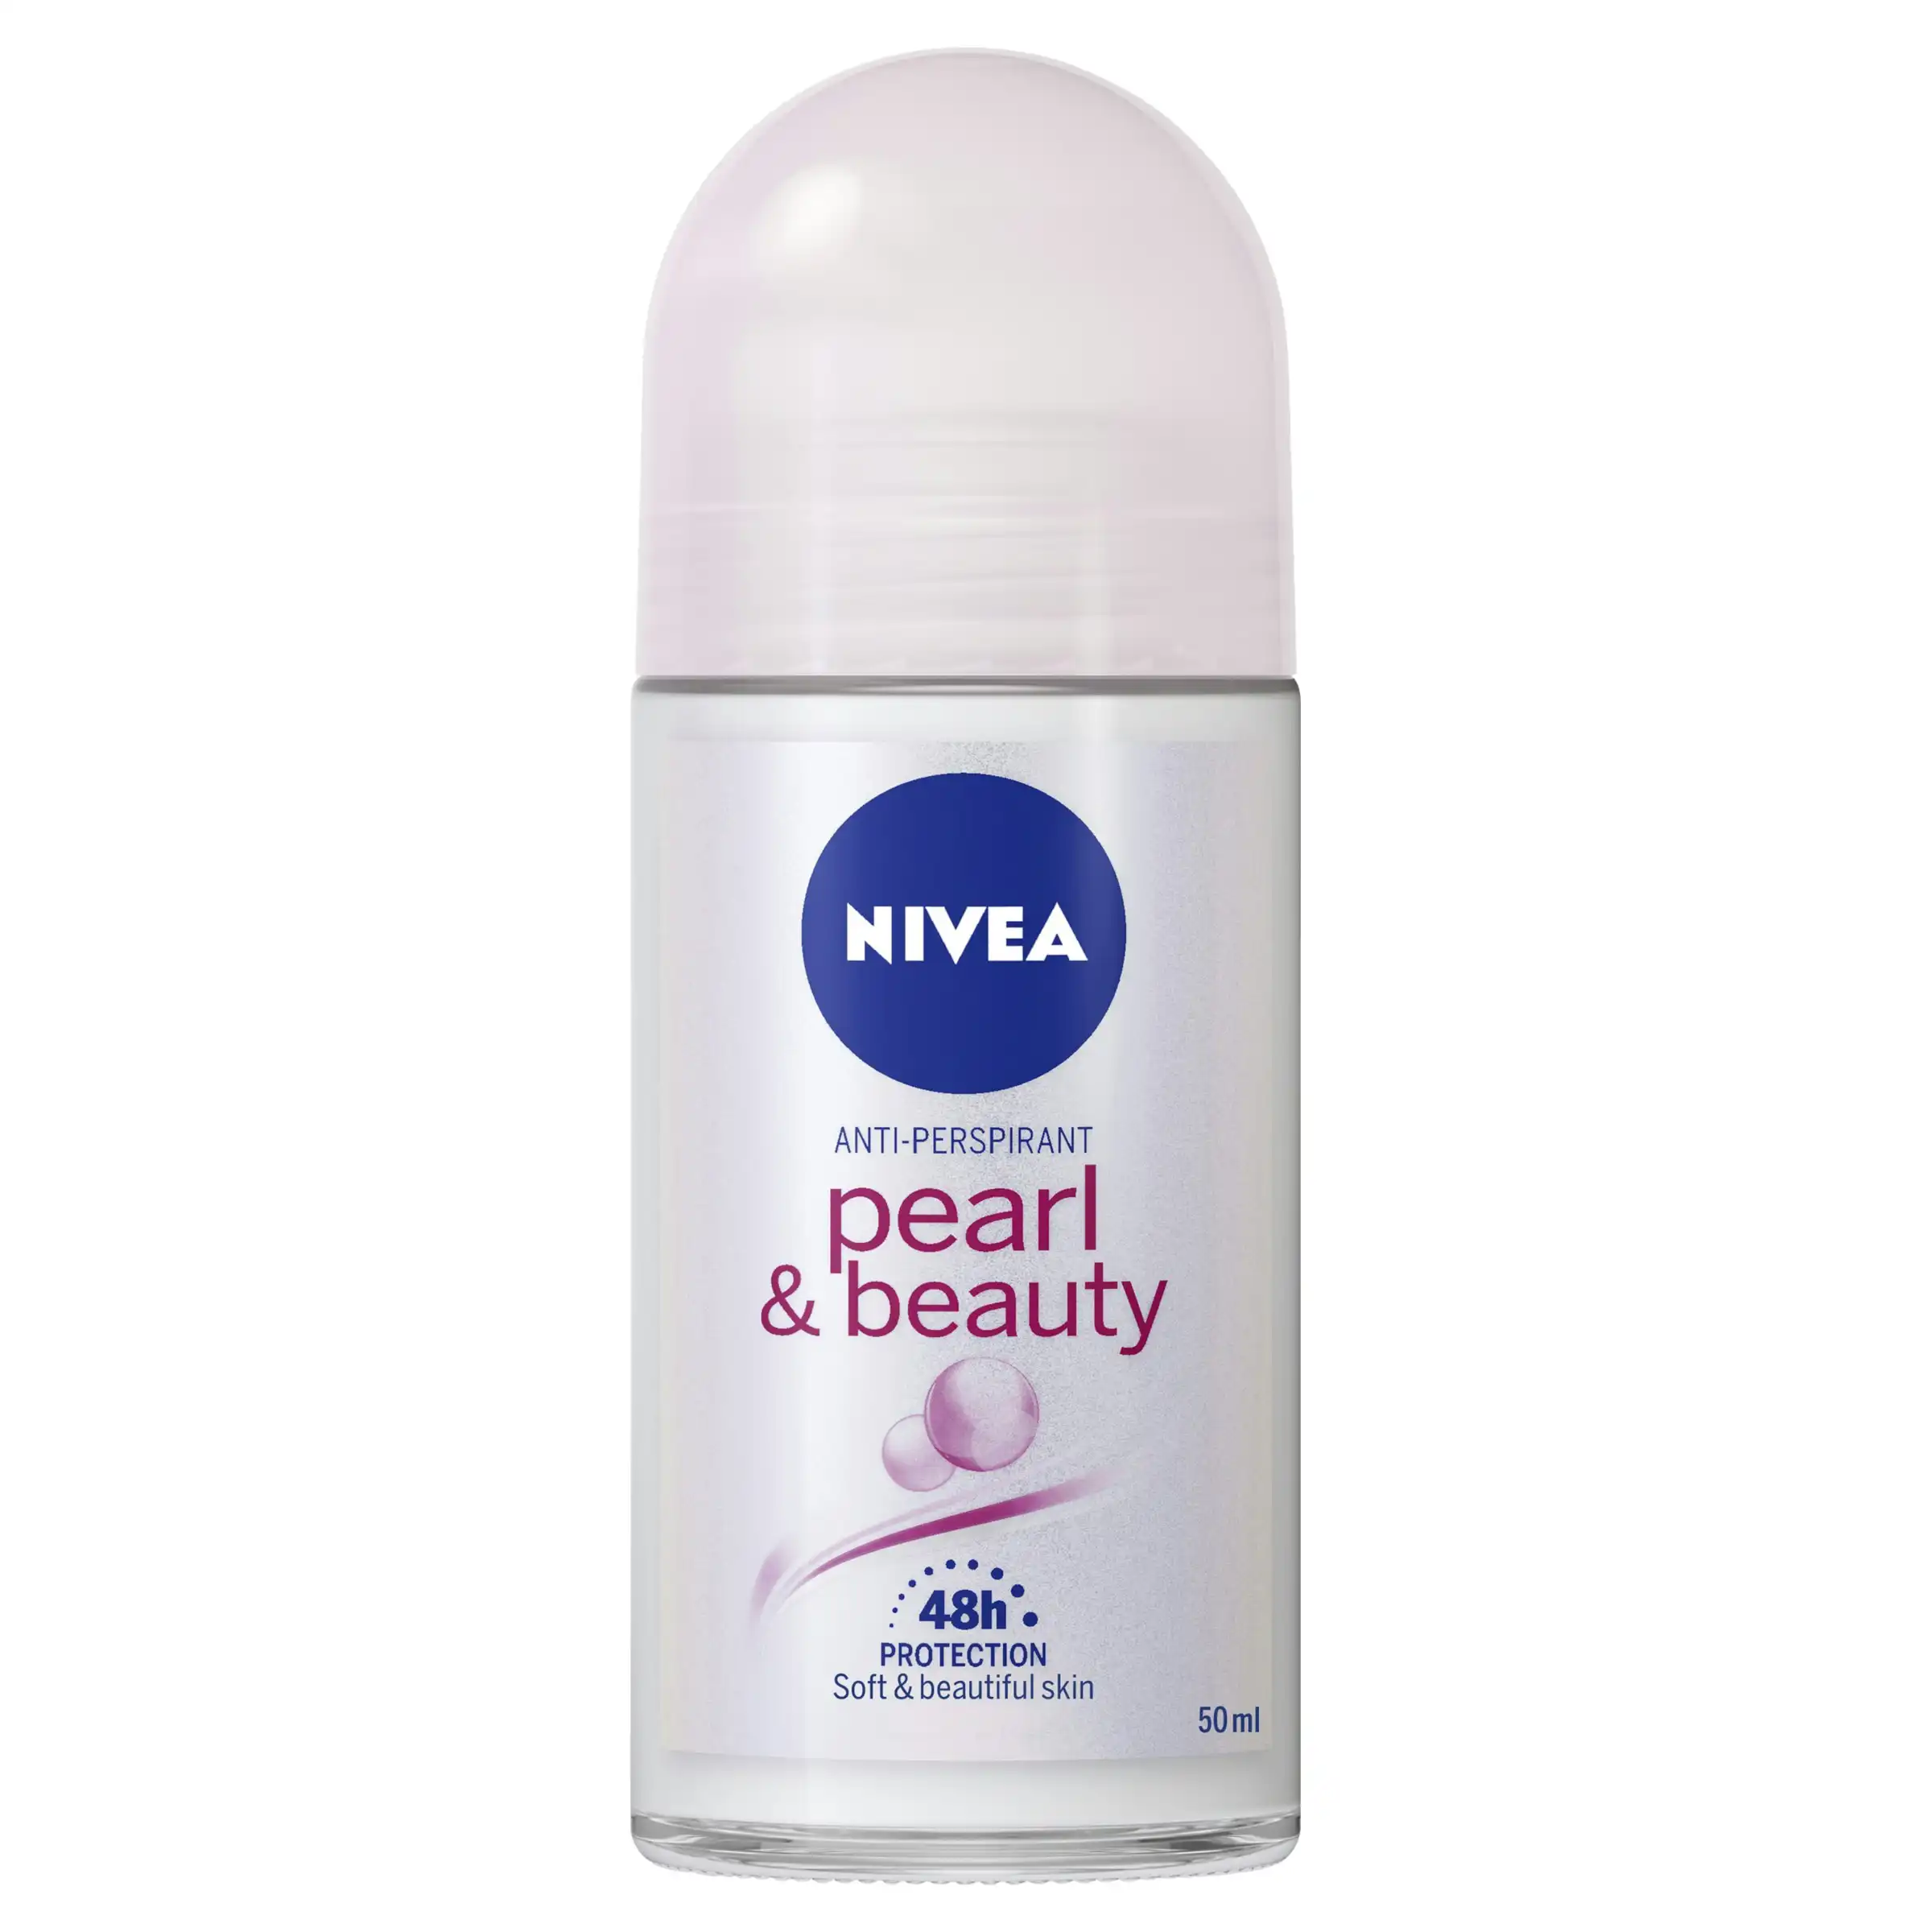 Nivea Pearl & Beauty Roll-on Deodorant 50ml